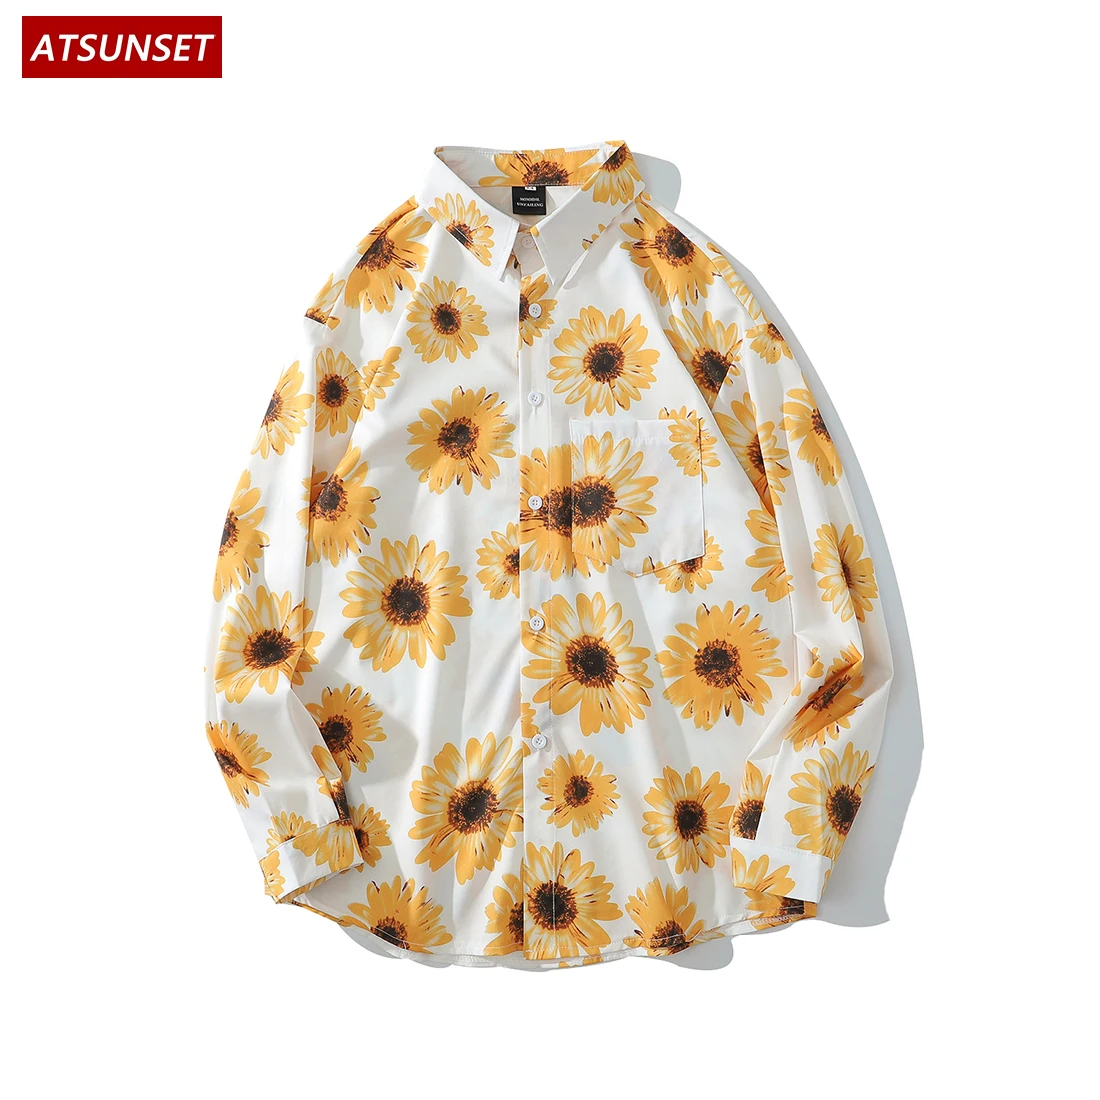 ATSUNSET Sunflower Print Country Style Shirt Hip Hop Streetwear Harajuku Long Sleeve Shirt Spring Summer Cotton Top